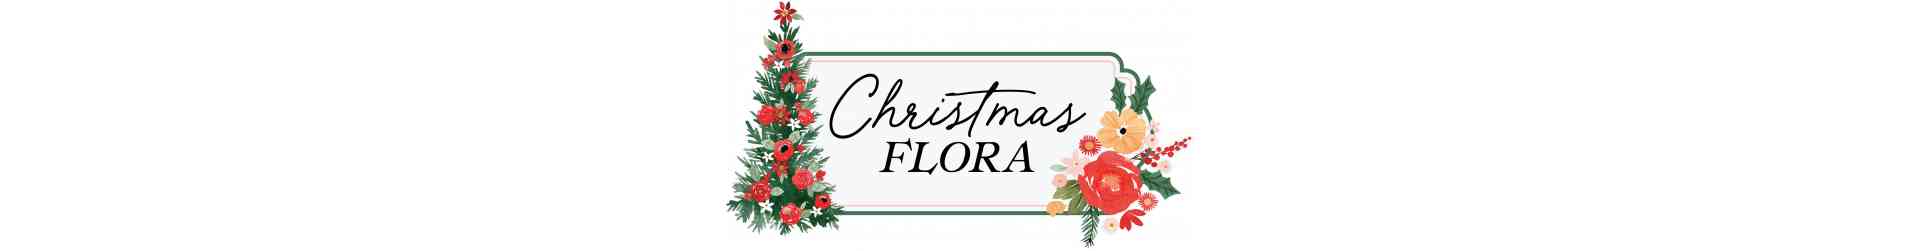 Merry Christmas Flora